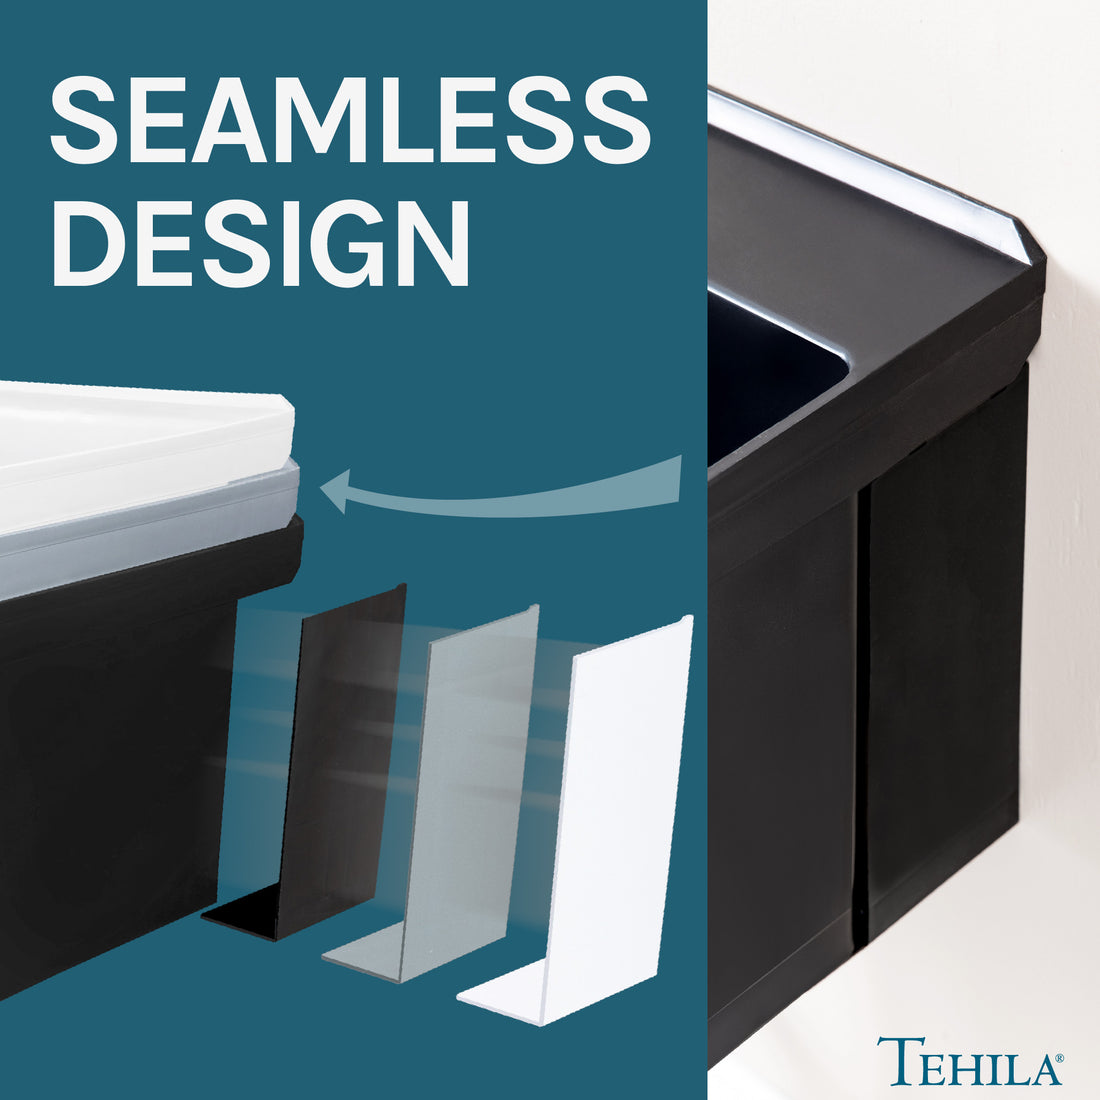 Tehila Black Wall Mounting Kit for Tehila Standard Sinks - Utility sinks vanites Tehila